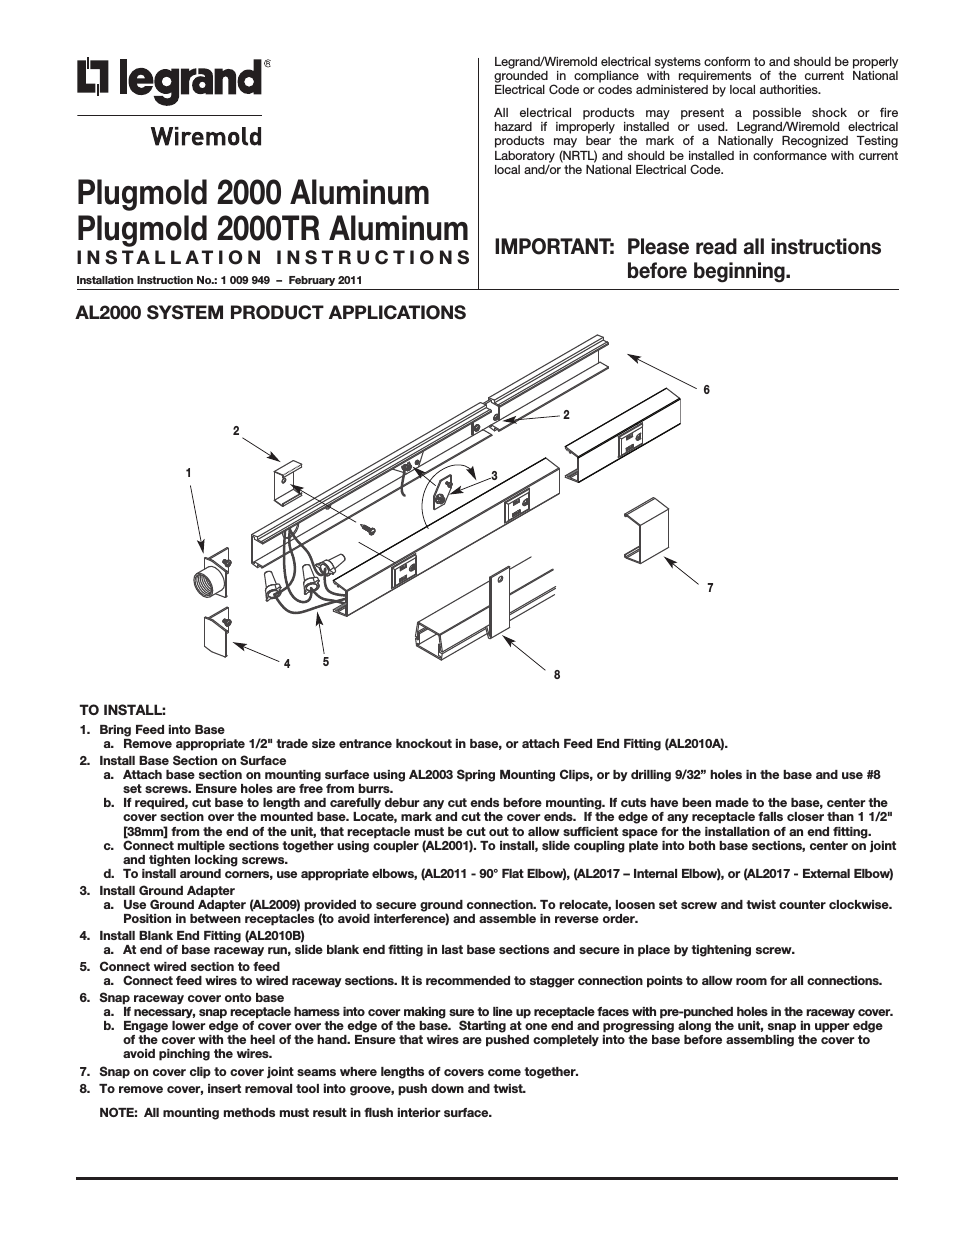 2000TR Series Aluminum Plugmold Multioutlet System